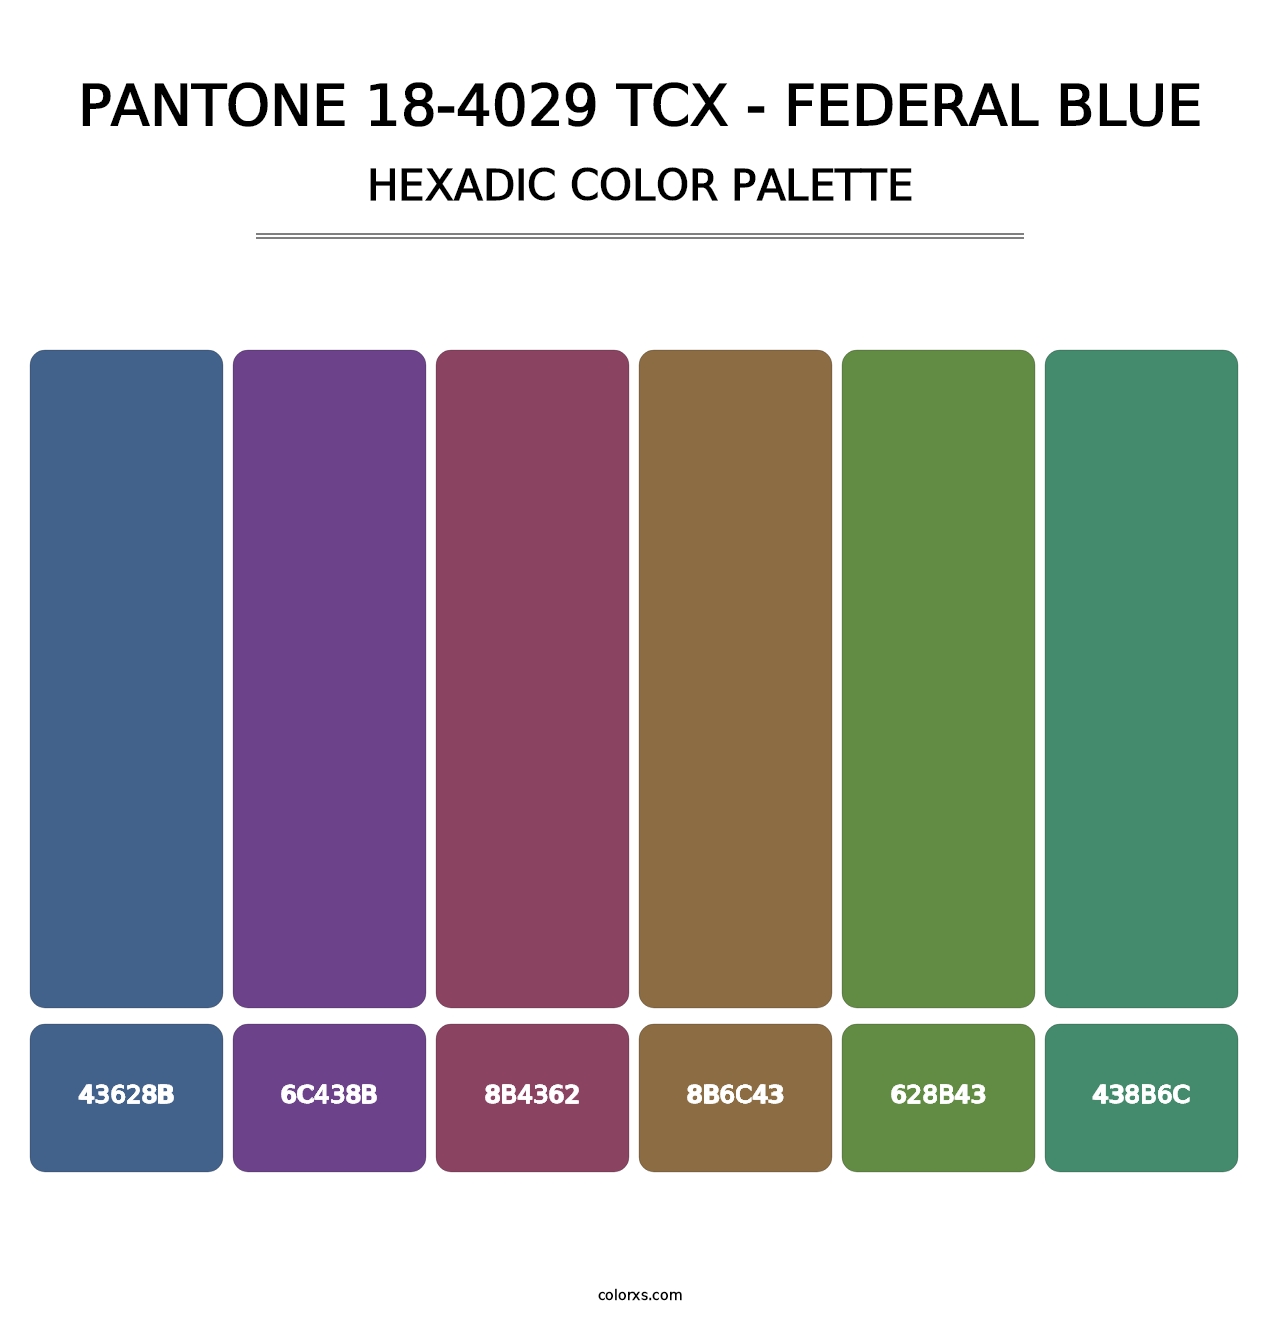 PANTONE 18-4029 TCX - Federal Blue - Hexadic Color Palette